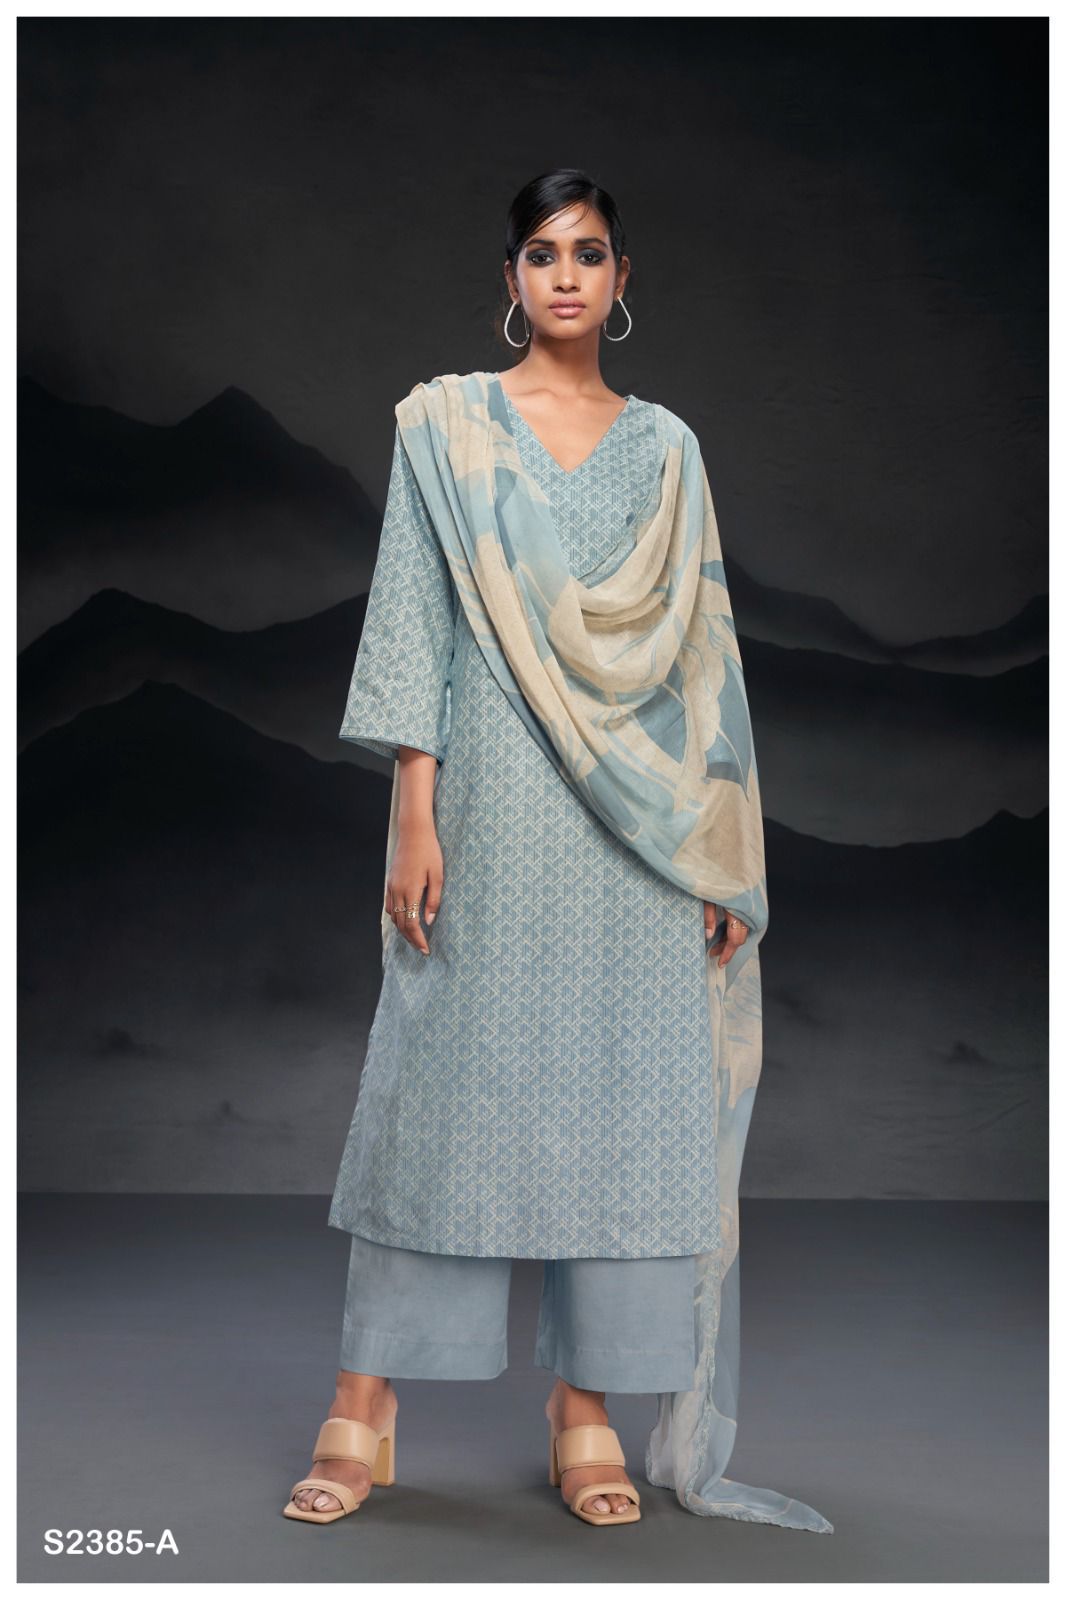 Huntah-2385 Ganga Premium Cotton Plazzo Style Suits